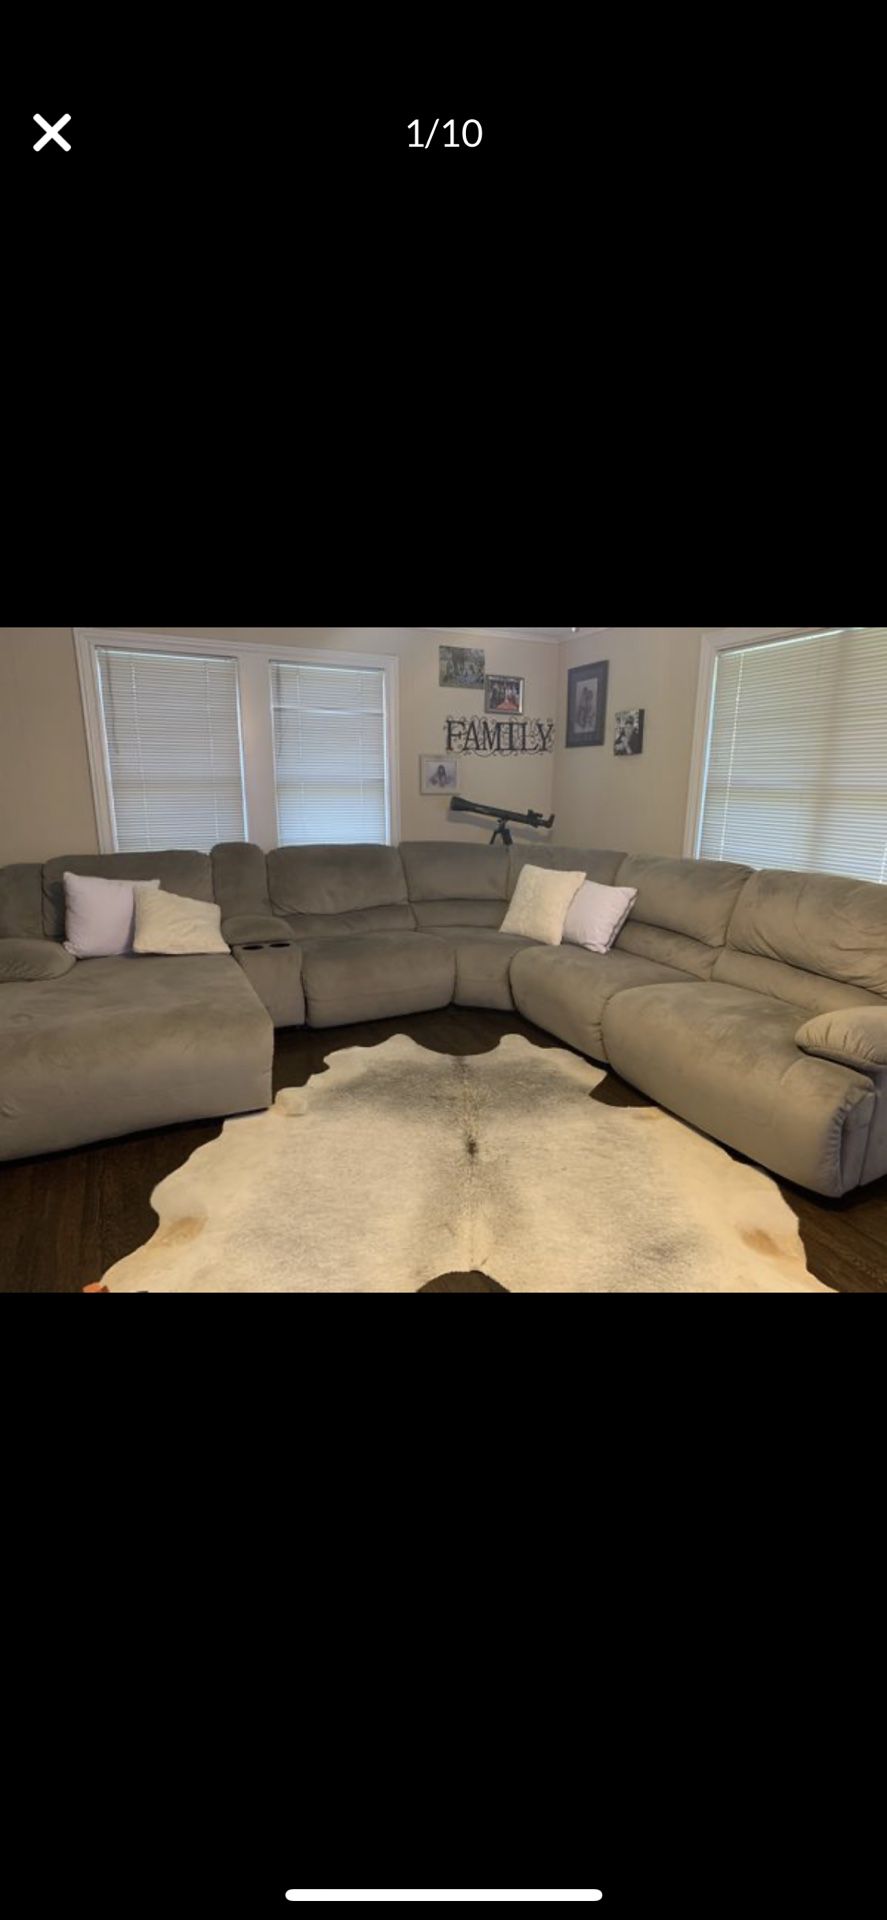 Comfy Sectional Sofa